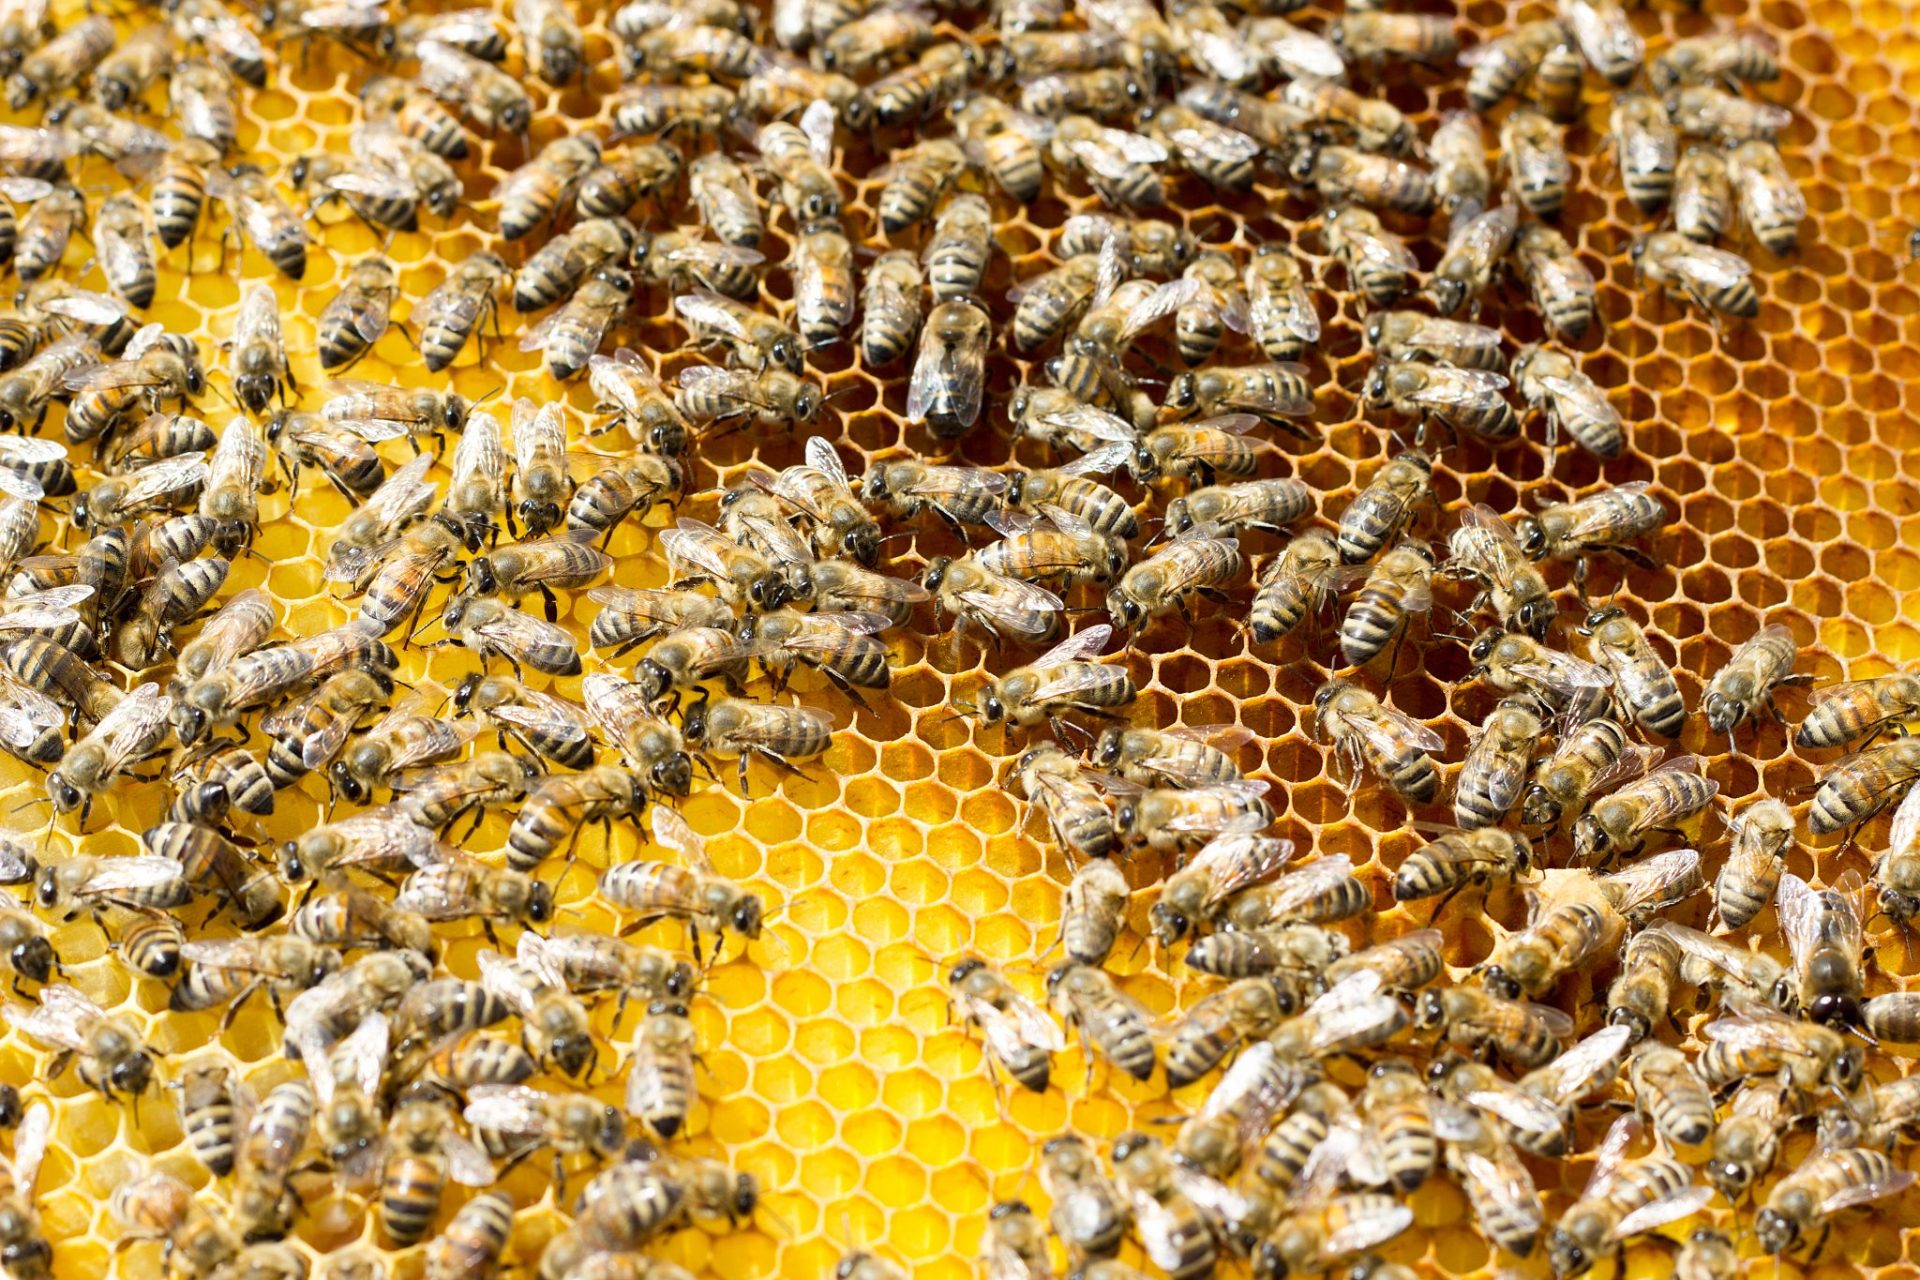 Genetic Diversity in Honeybees - Genetic Aspects that Contribute to Honeybee Population Declines